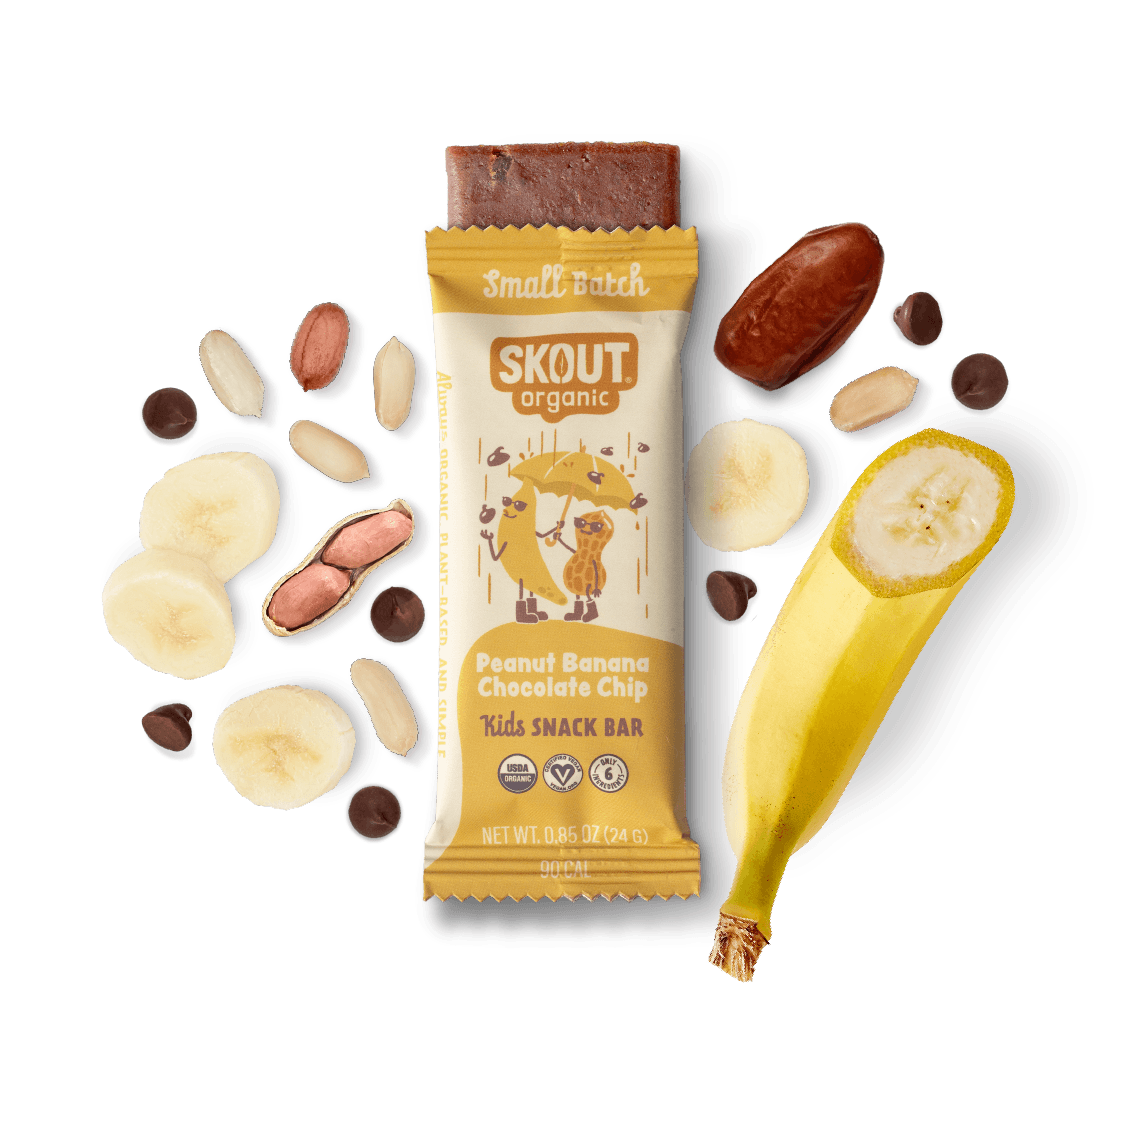 Skout Organic Peanut Banana Chocolate Chip by Skout Organic